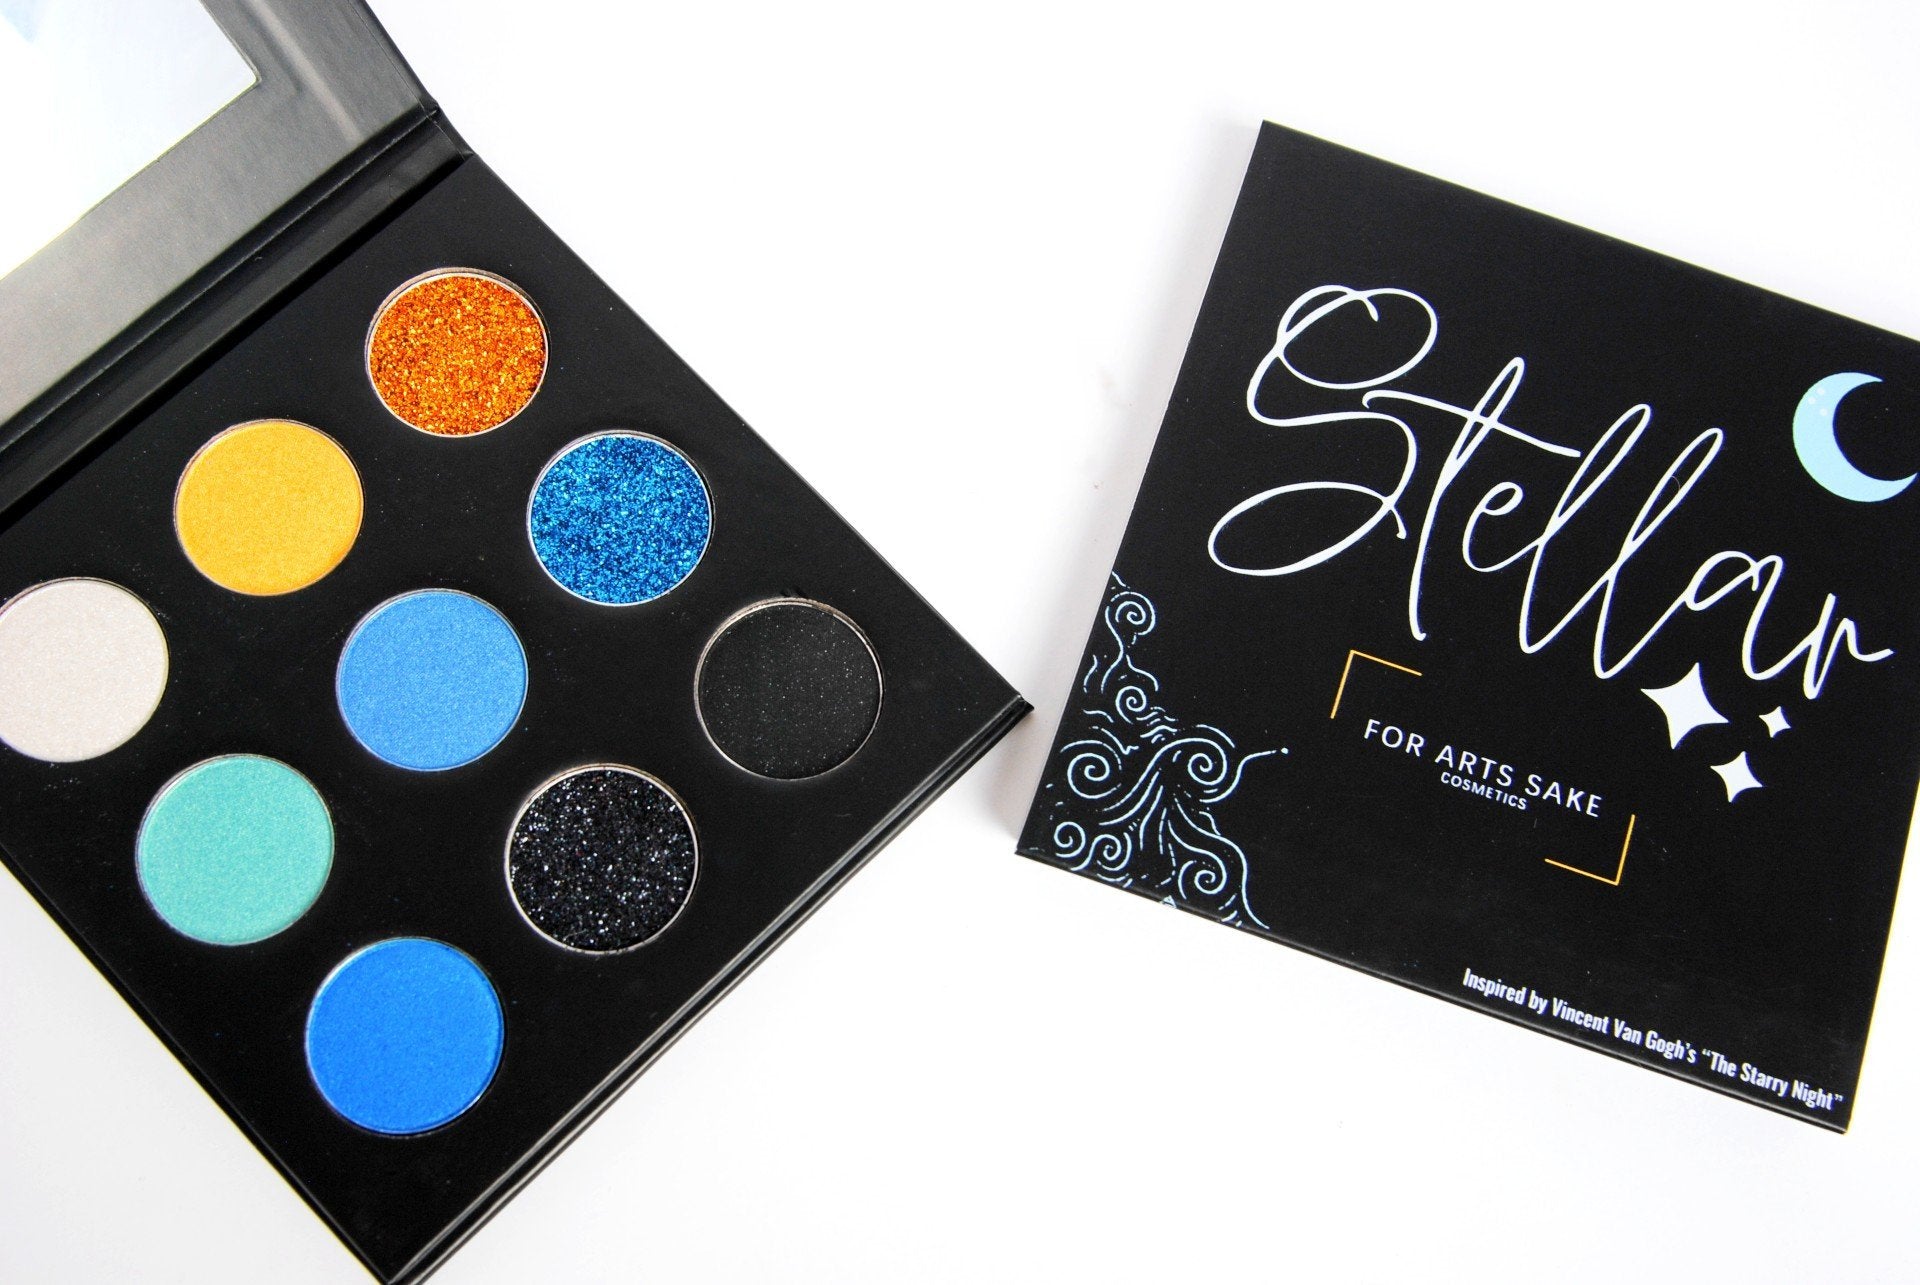 Stellar Eyeshadow Palette - For Arts Sake Cosmetics